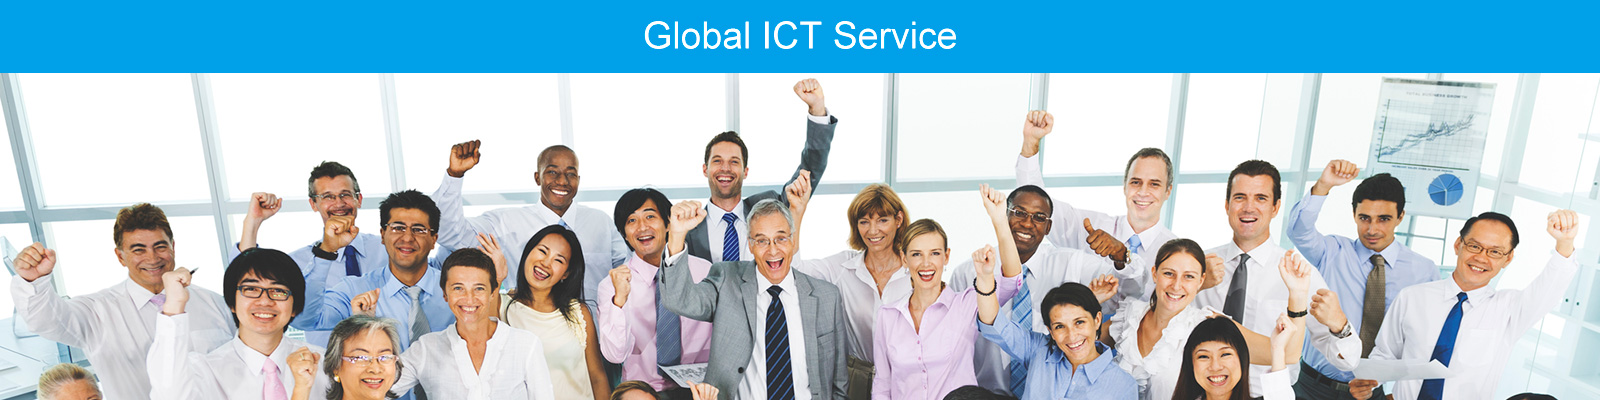 Global ICT Service